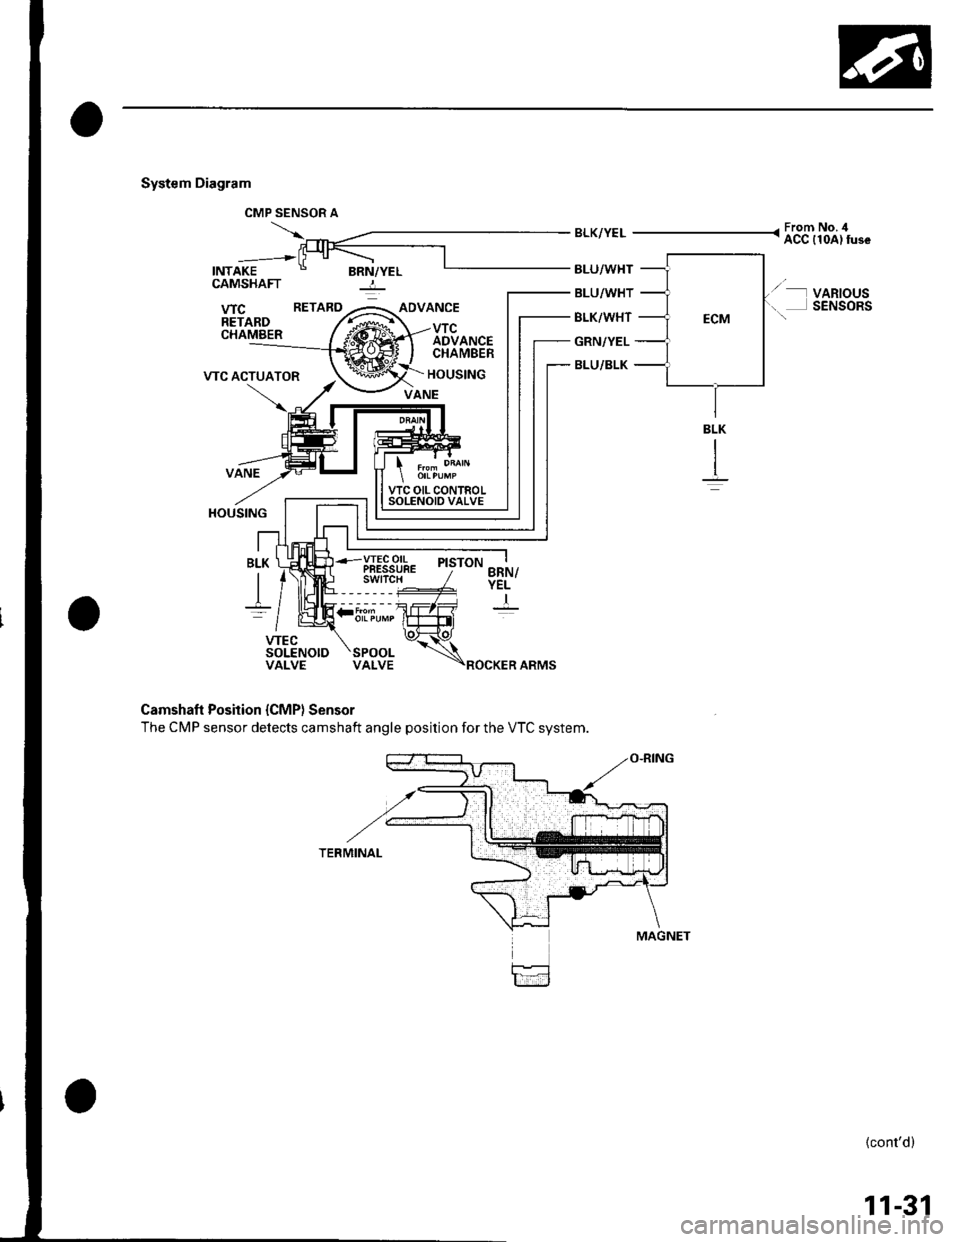 HONDA CIVIC 2003 7.G Workshop Manual System Diagram
INTAKE
CMP SENSOR A
BRN/YELBLU/WHT
BLU/WHT
BLK/WHT
GRN/YEL
BLU/BLK
From No. ilACC {10A) fuse
VARIOUSSENSORS
CAMSHAFT -:-
BLK
It
Camshaft Position {CMP} Sensor
The CMP sensor detects cam